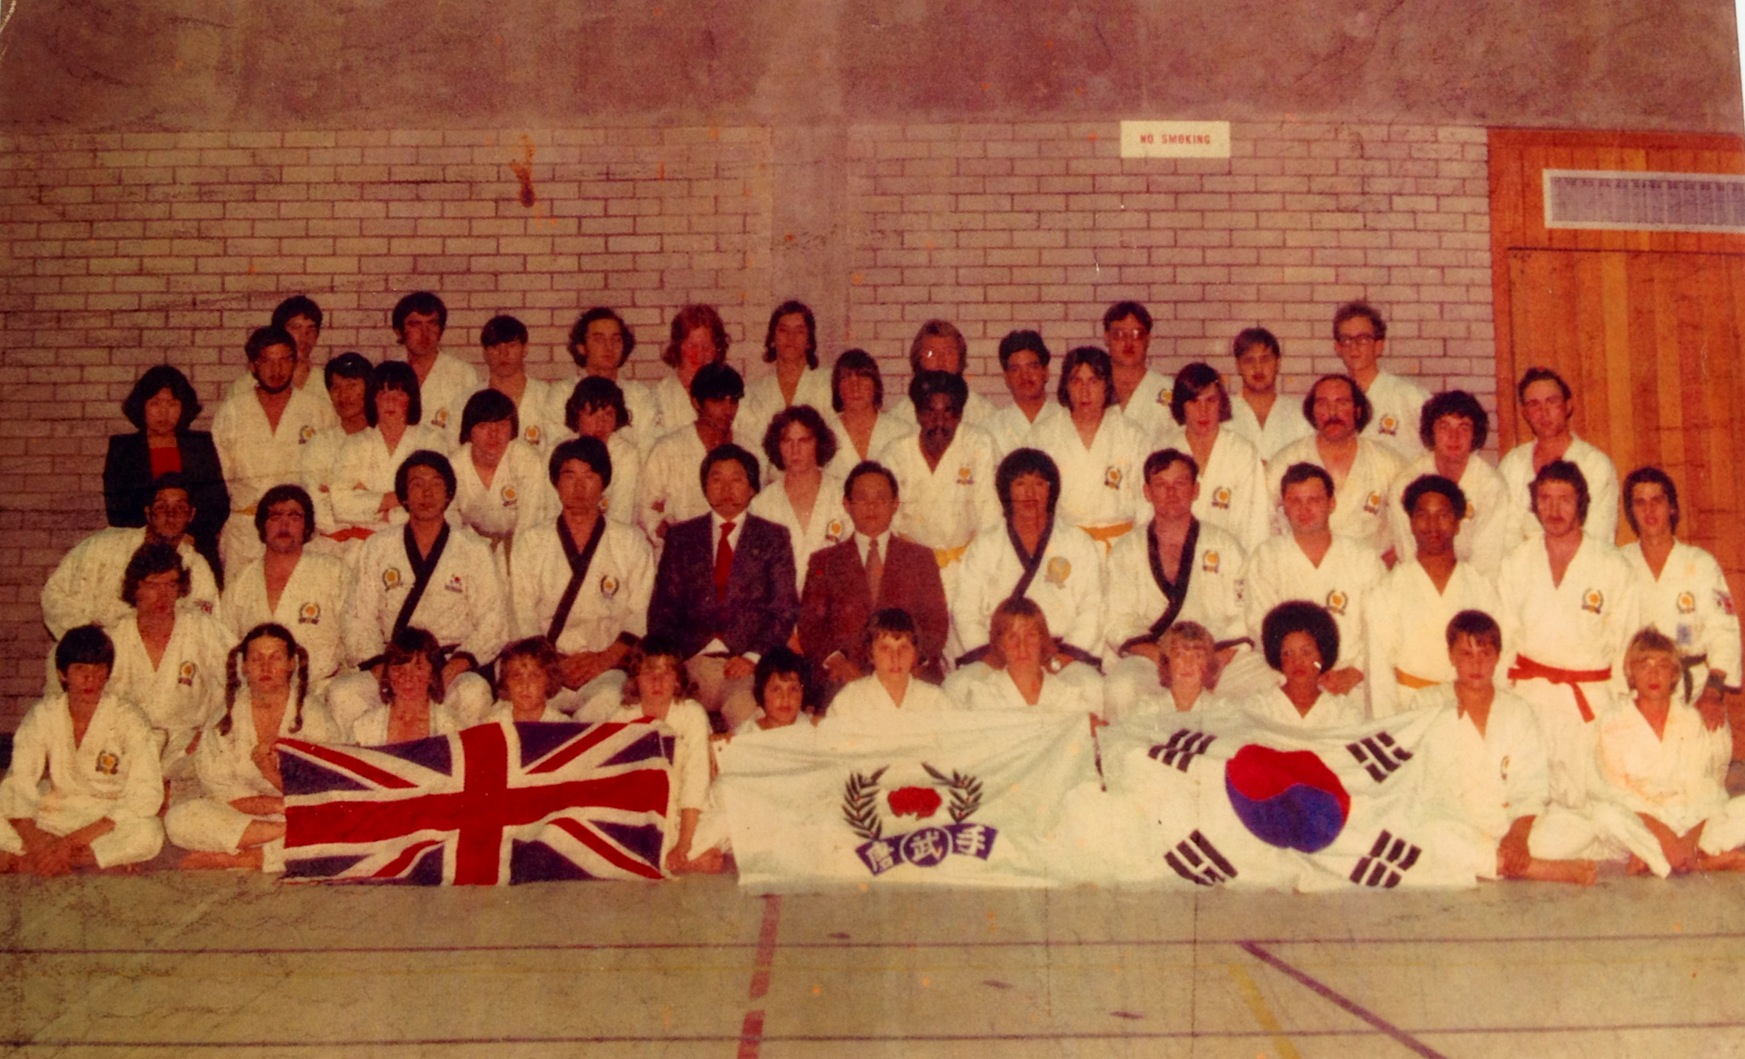 Tang Soo Do group photo, St. Ives 1974